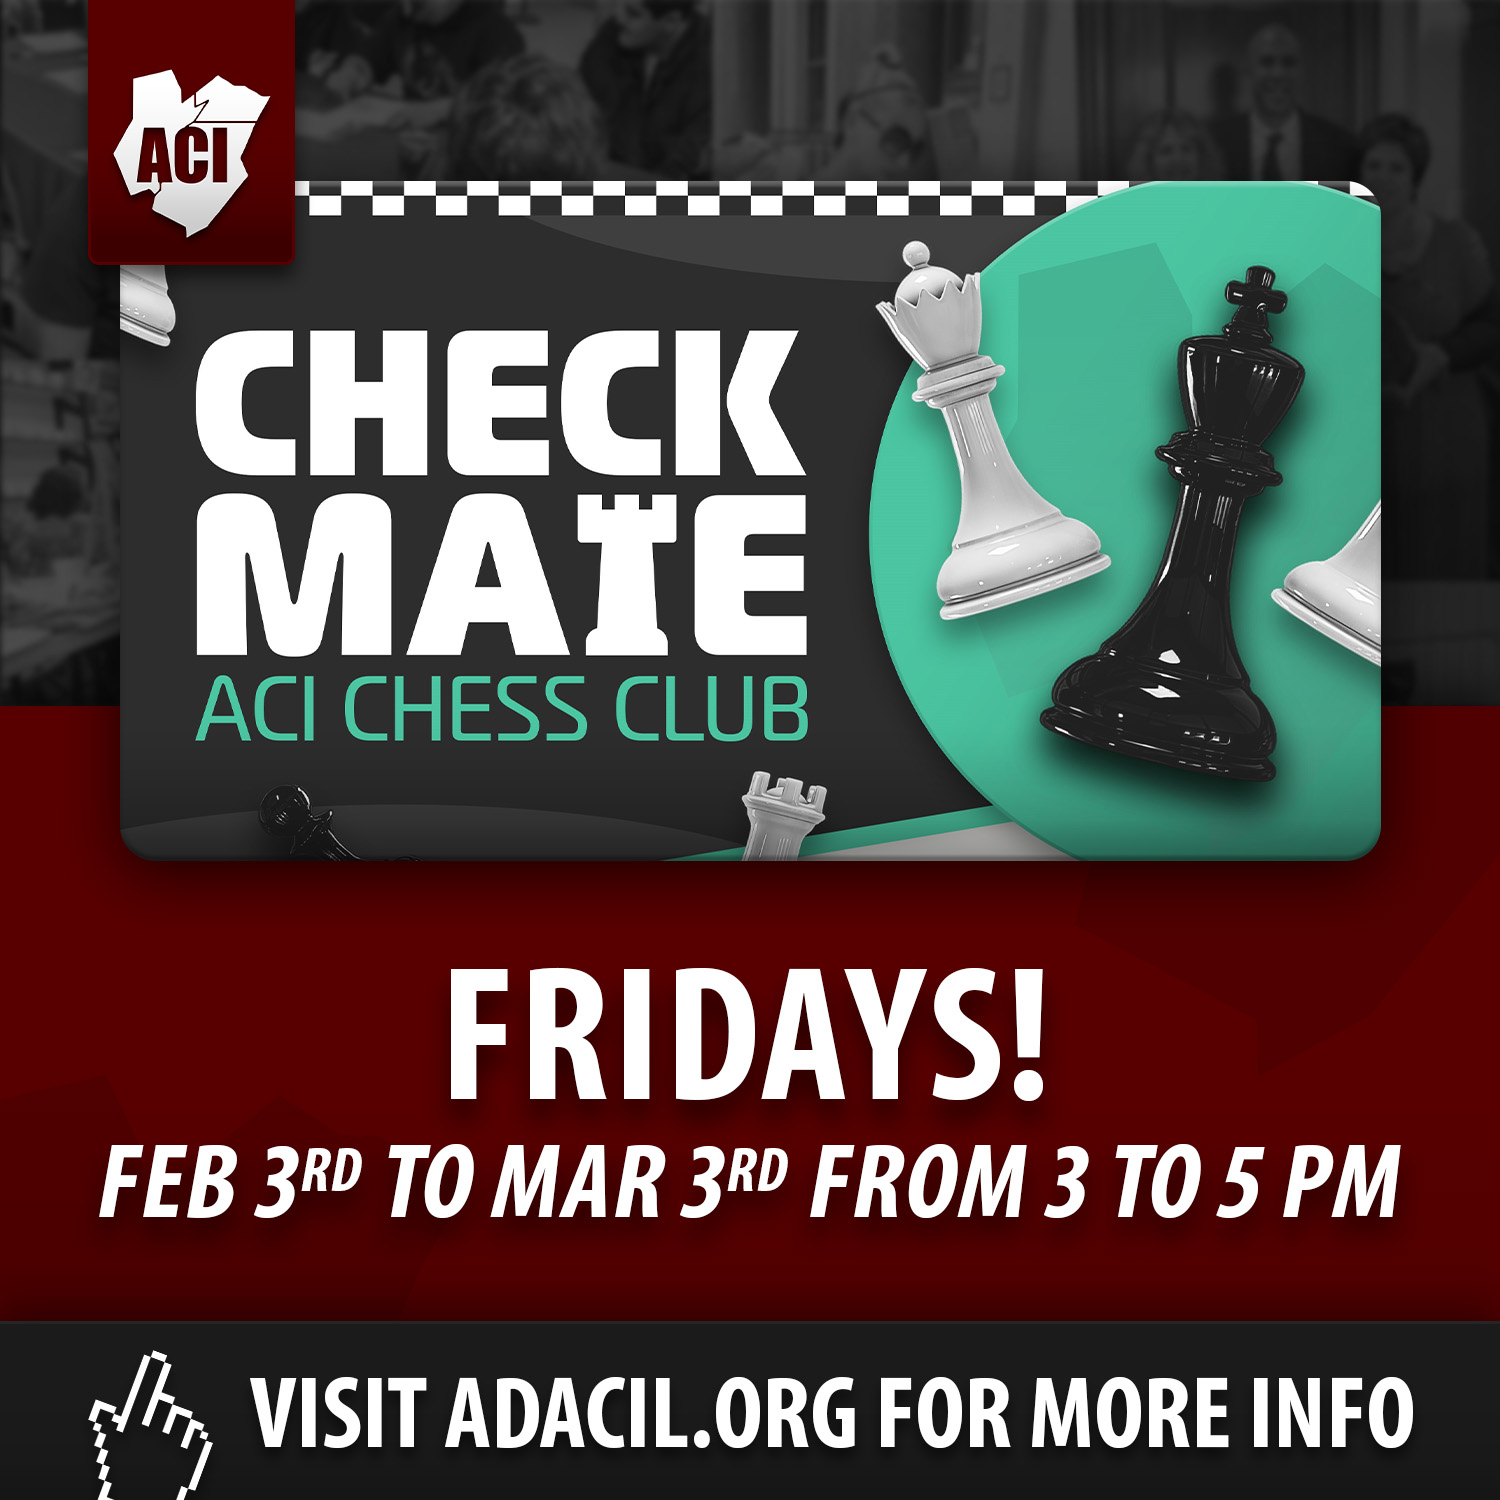 XEQUE MATE BRASIL - Club de ajedrez 